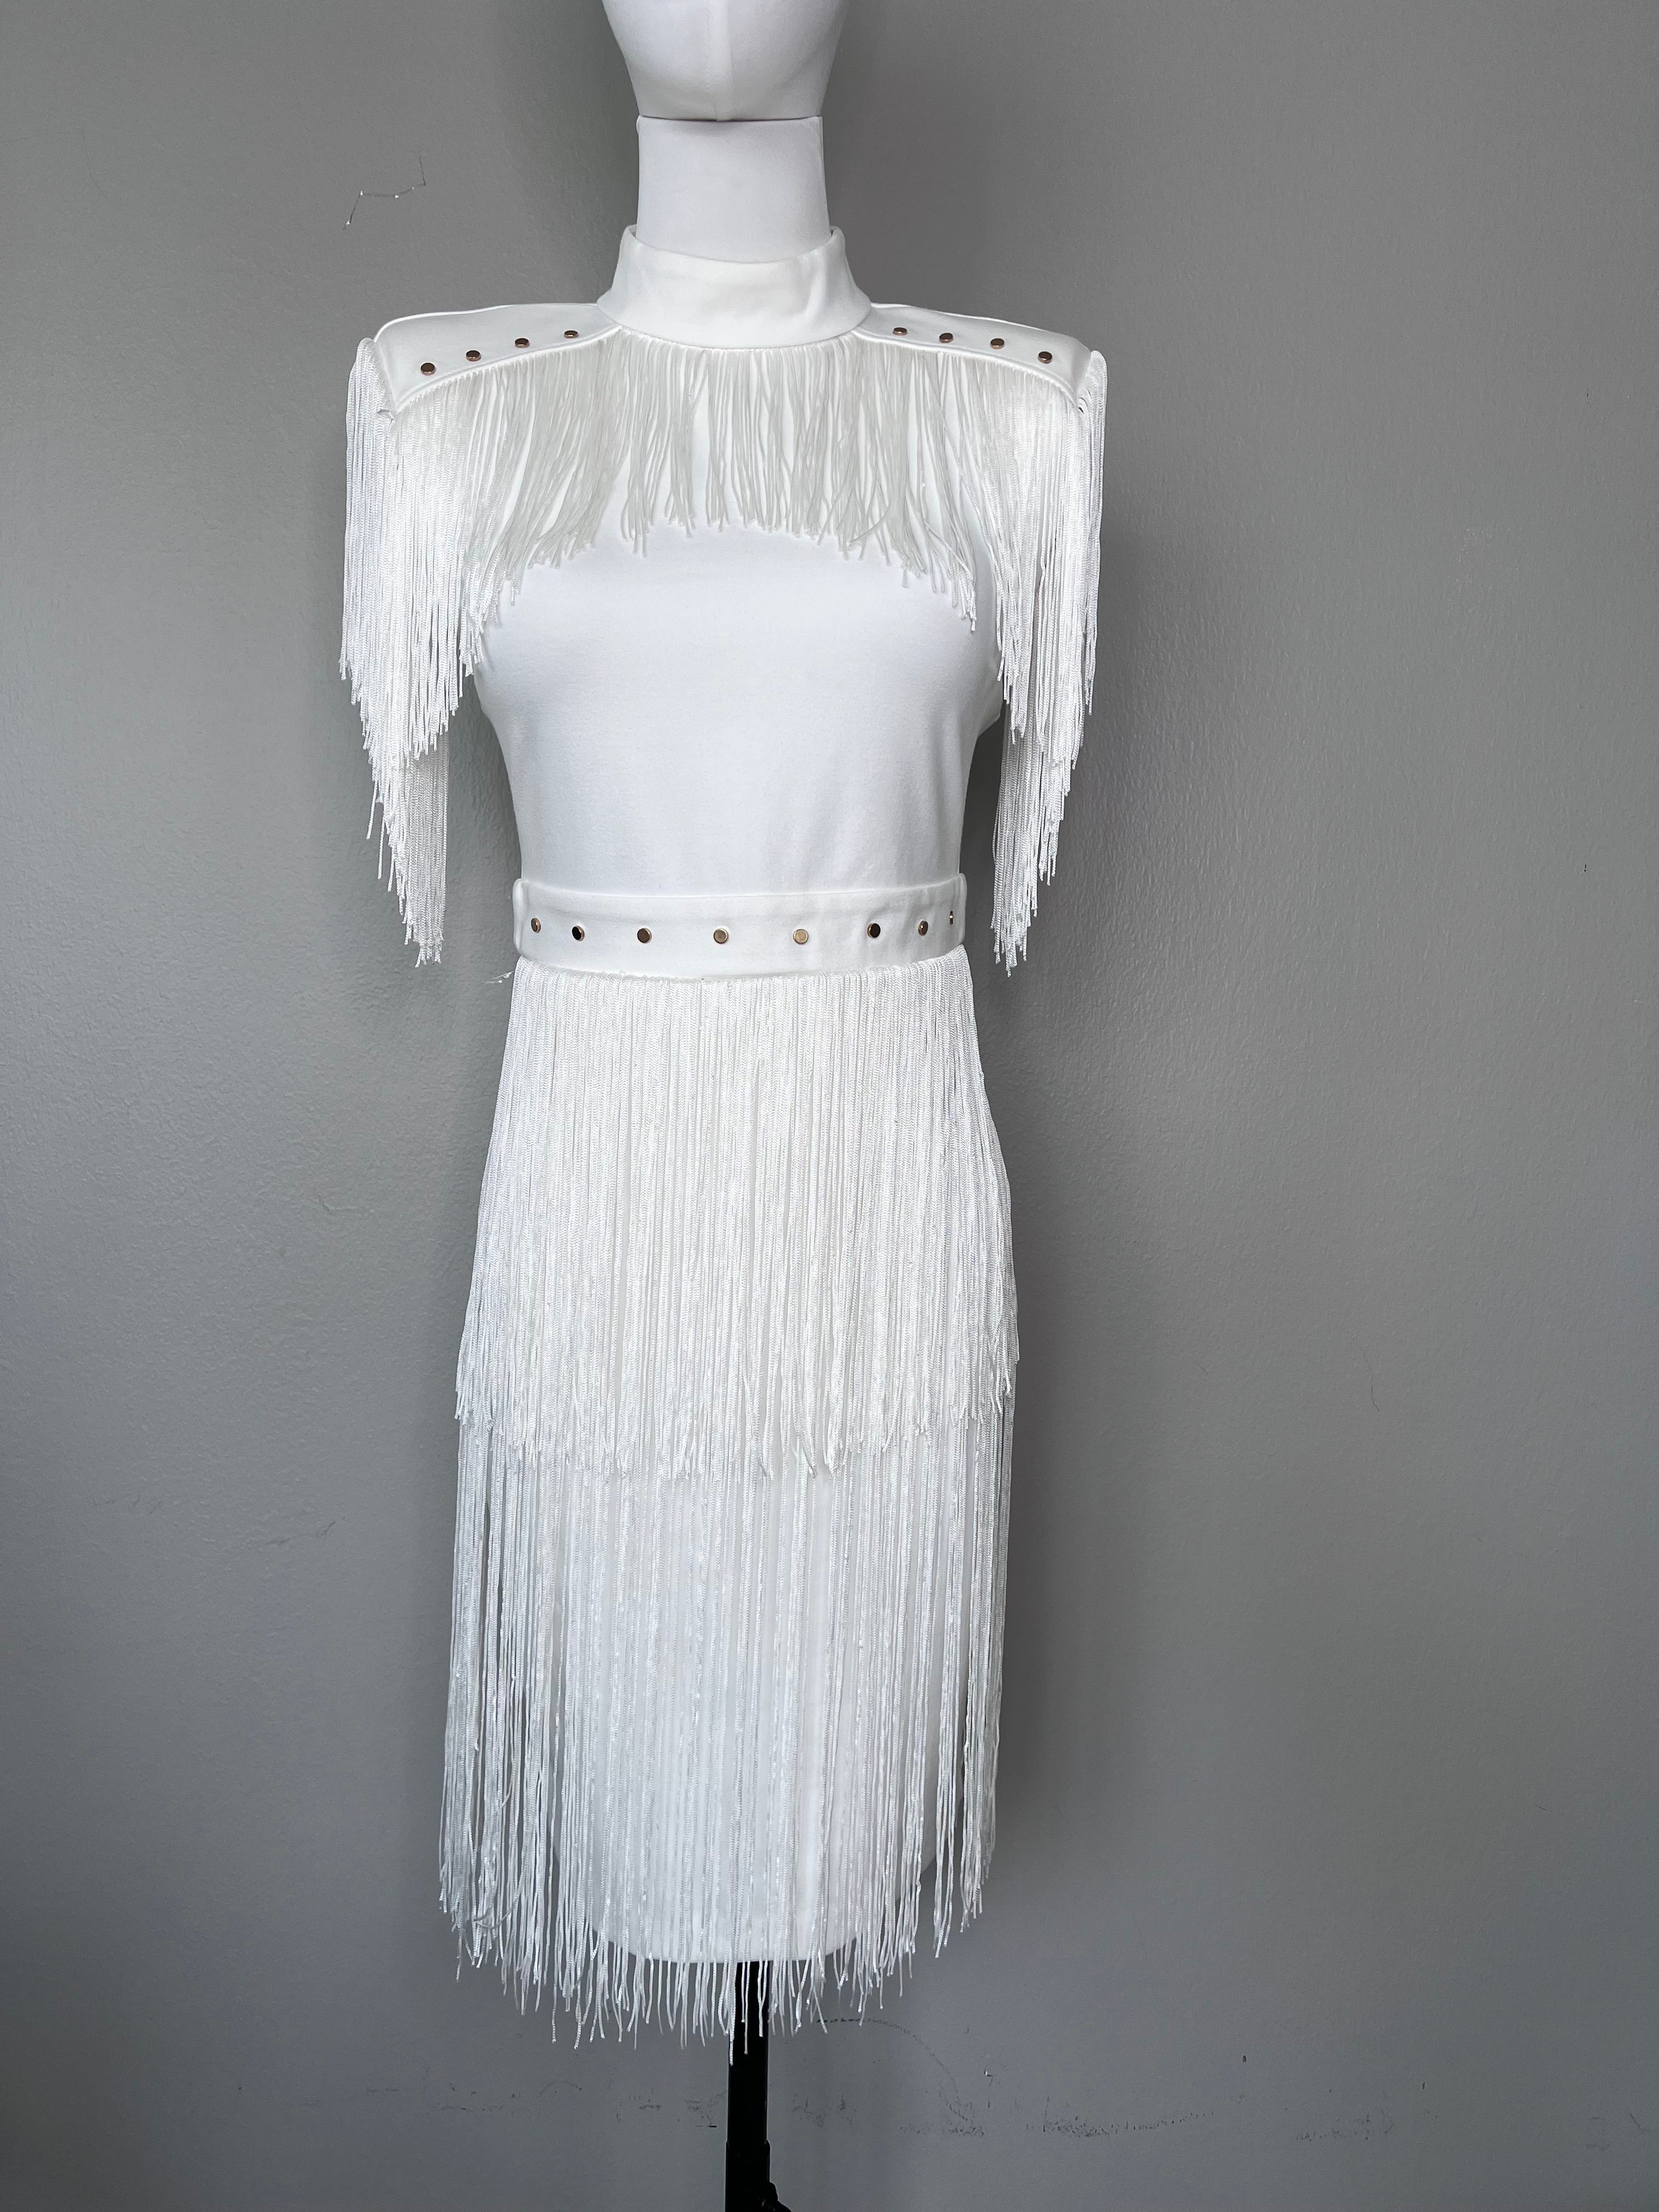 Brand New!limited edition white dress with fringe tassles - Karen Millen